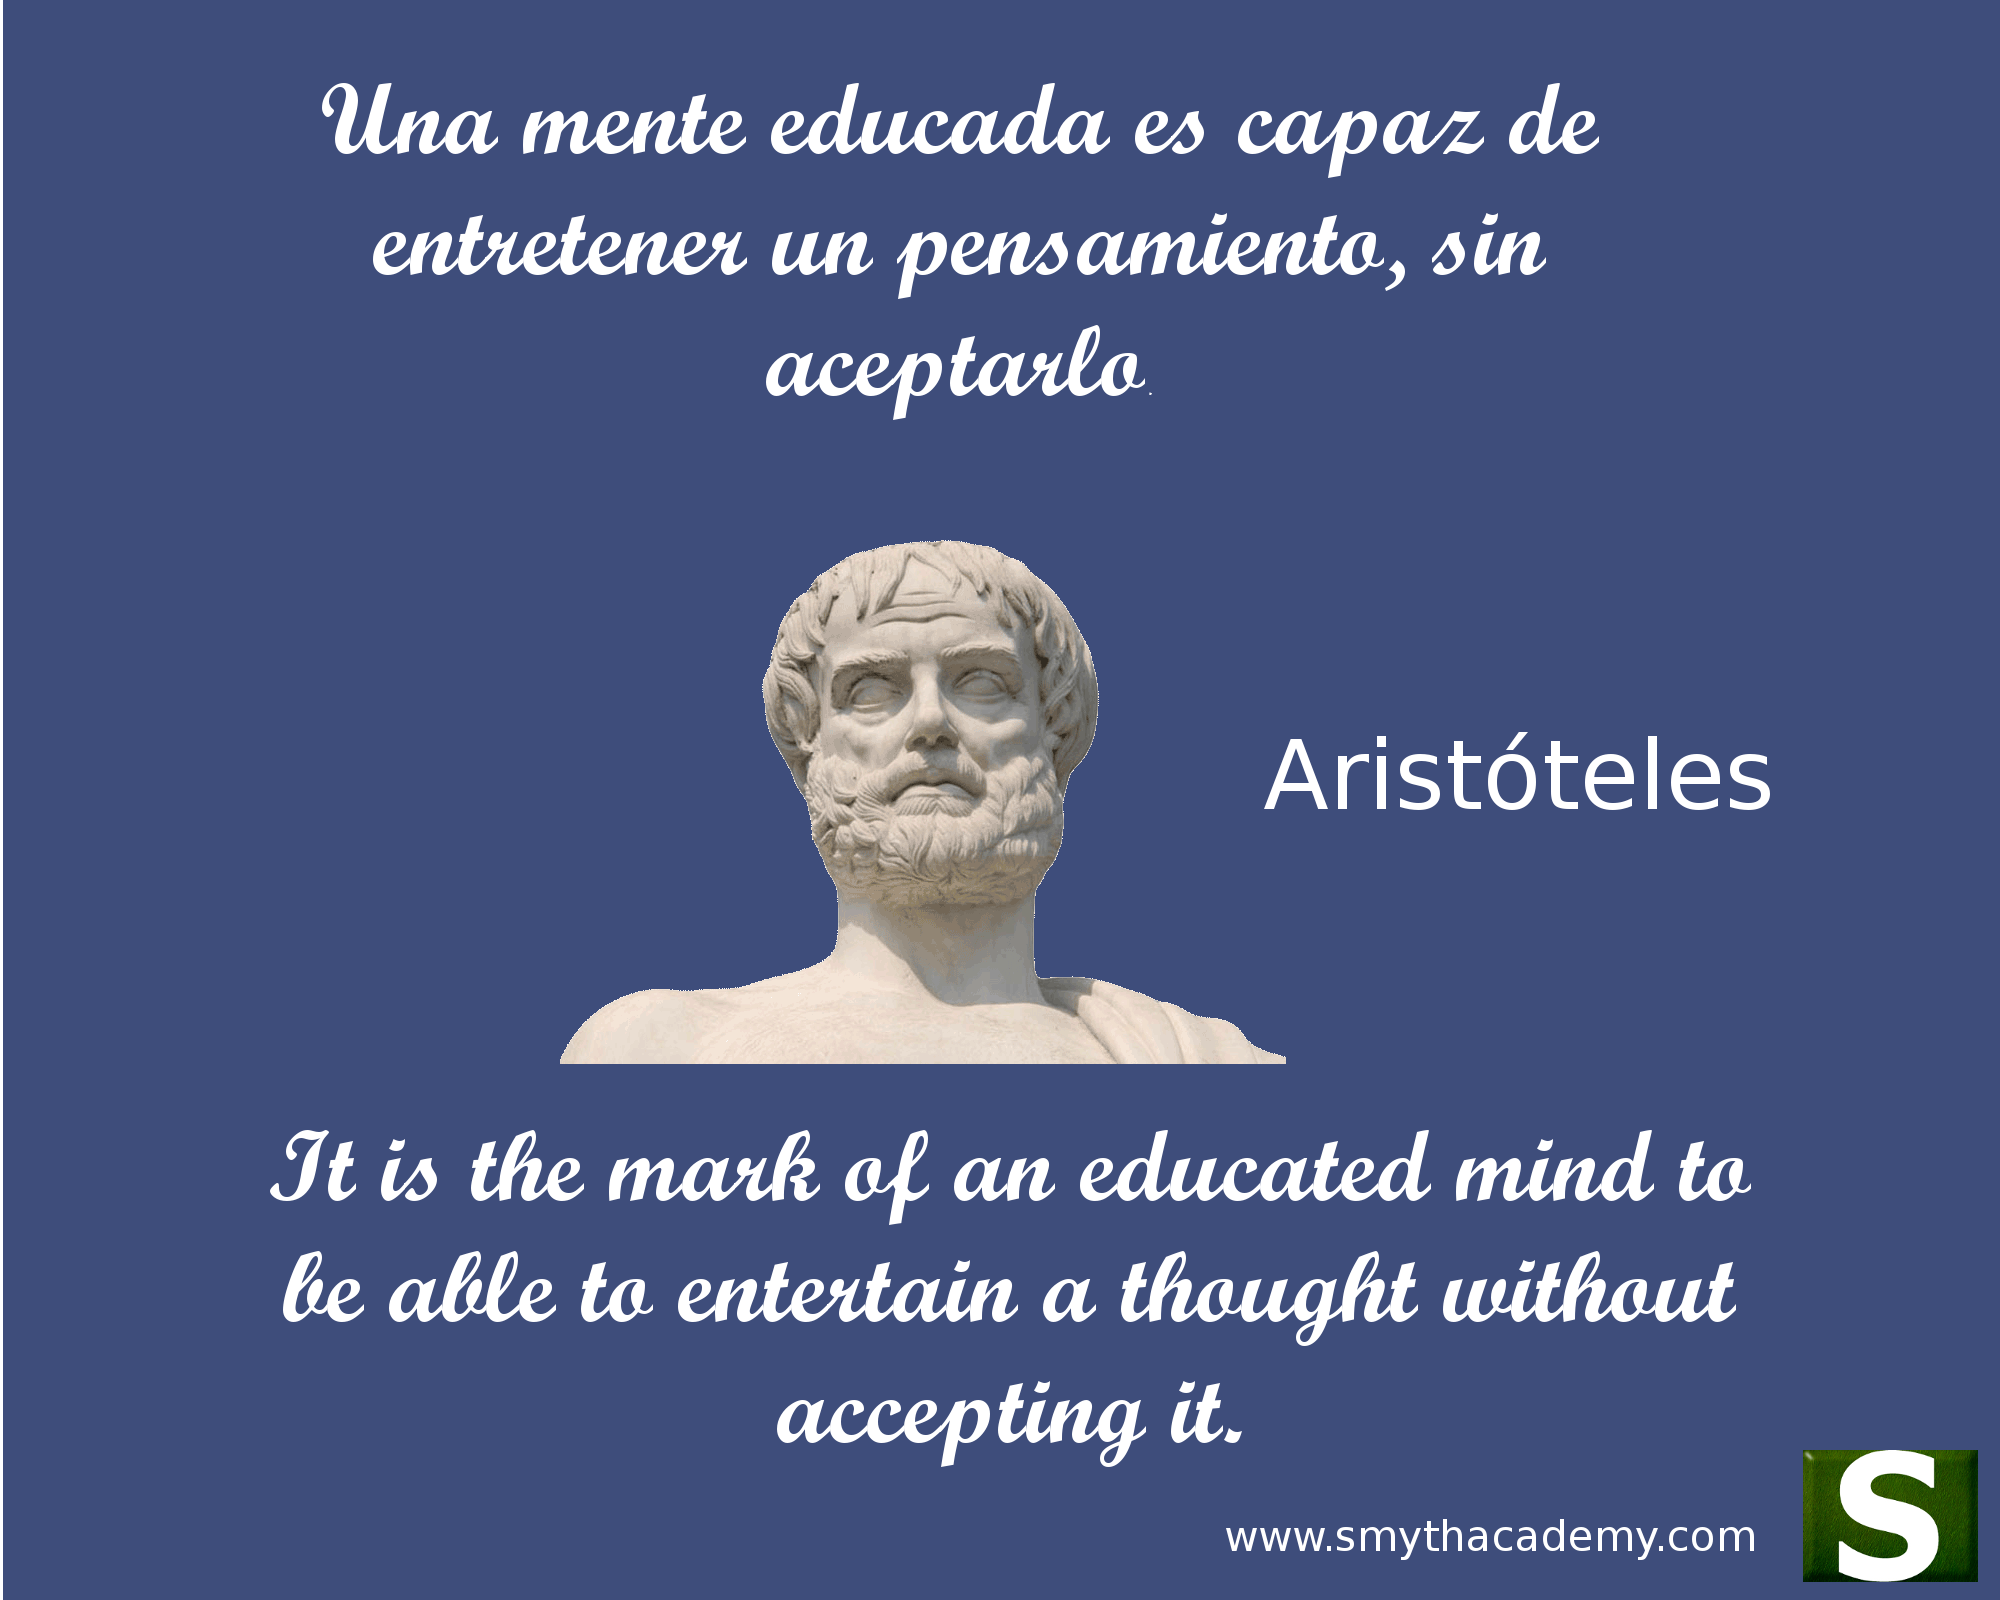 aristoteles.png